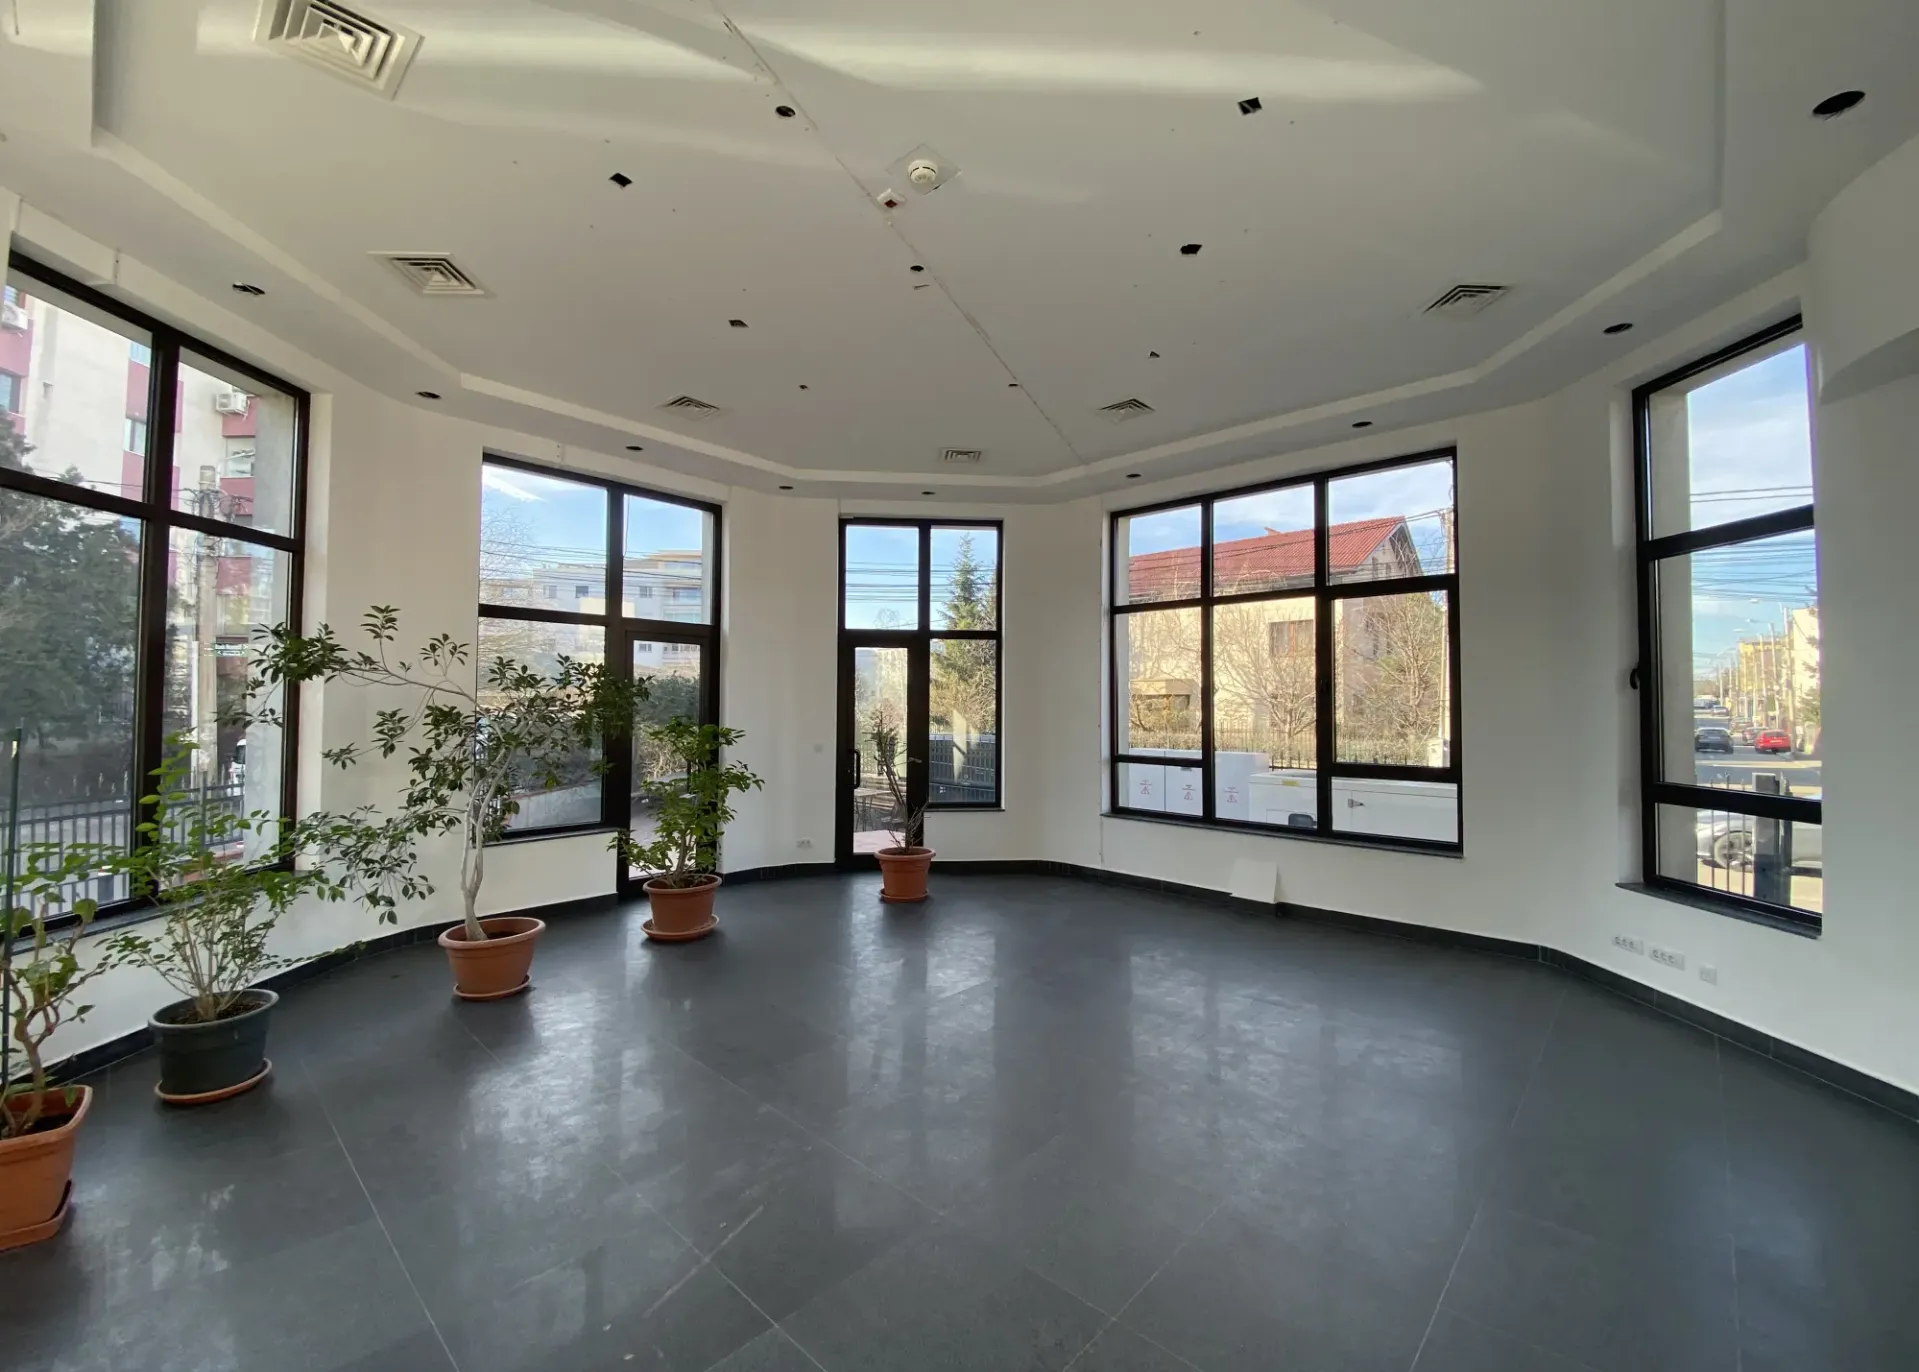 Hunderwasser house - parter - 64 m2 - poza interior 2000x1430.webp